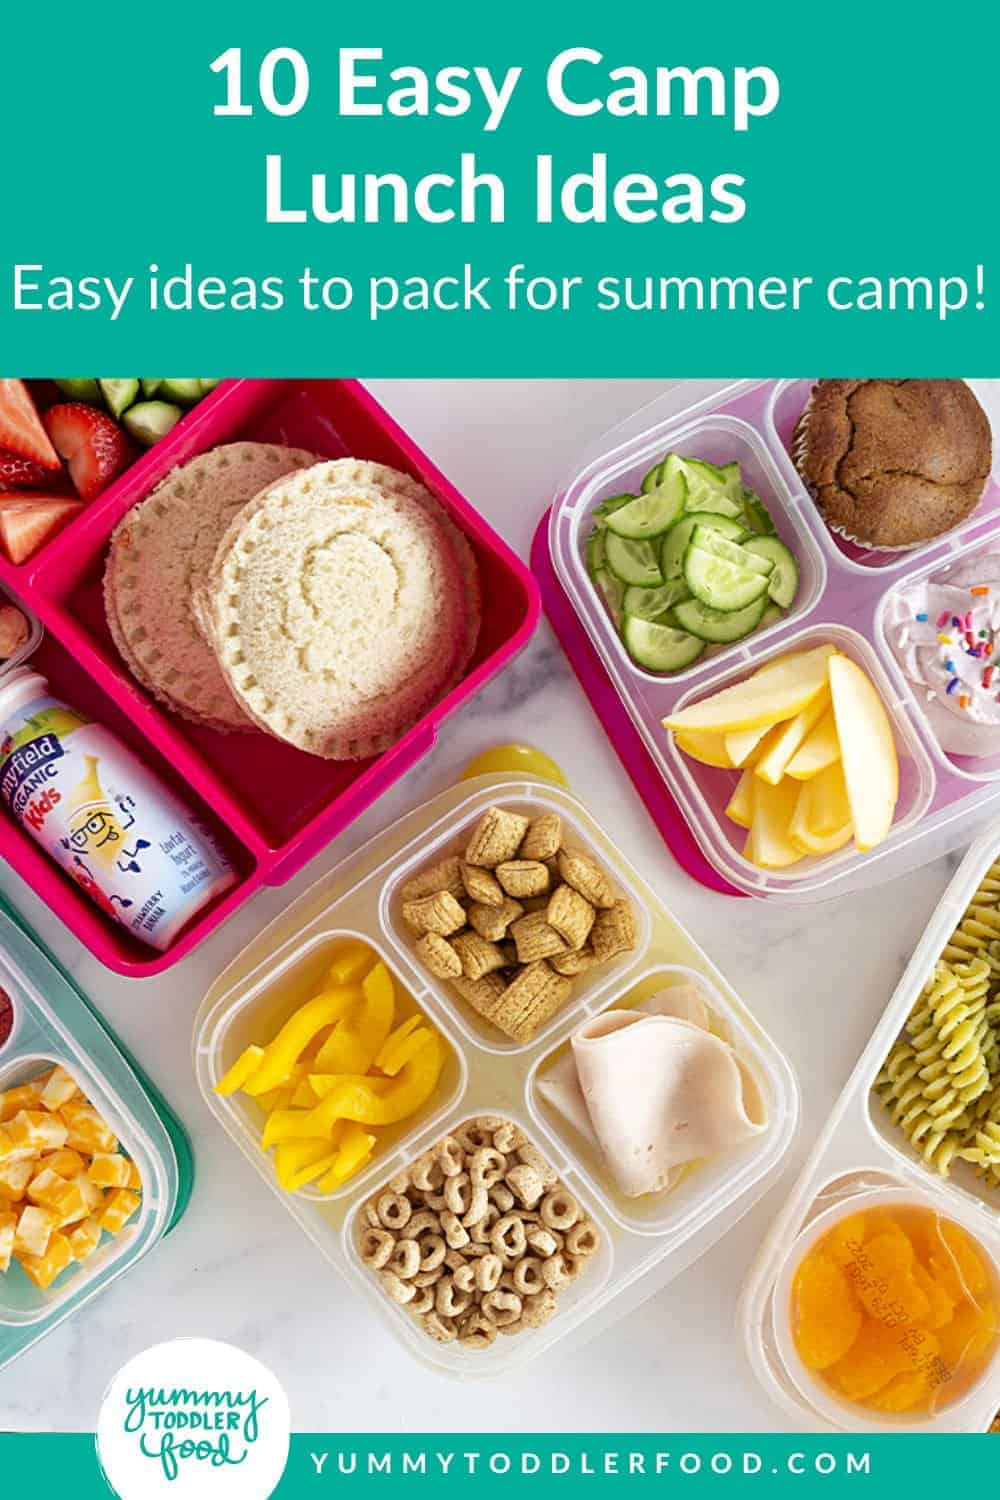 10 Easy Camp Lunch Ideas - Yummy Toddler Food